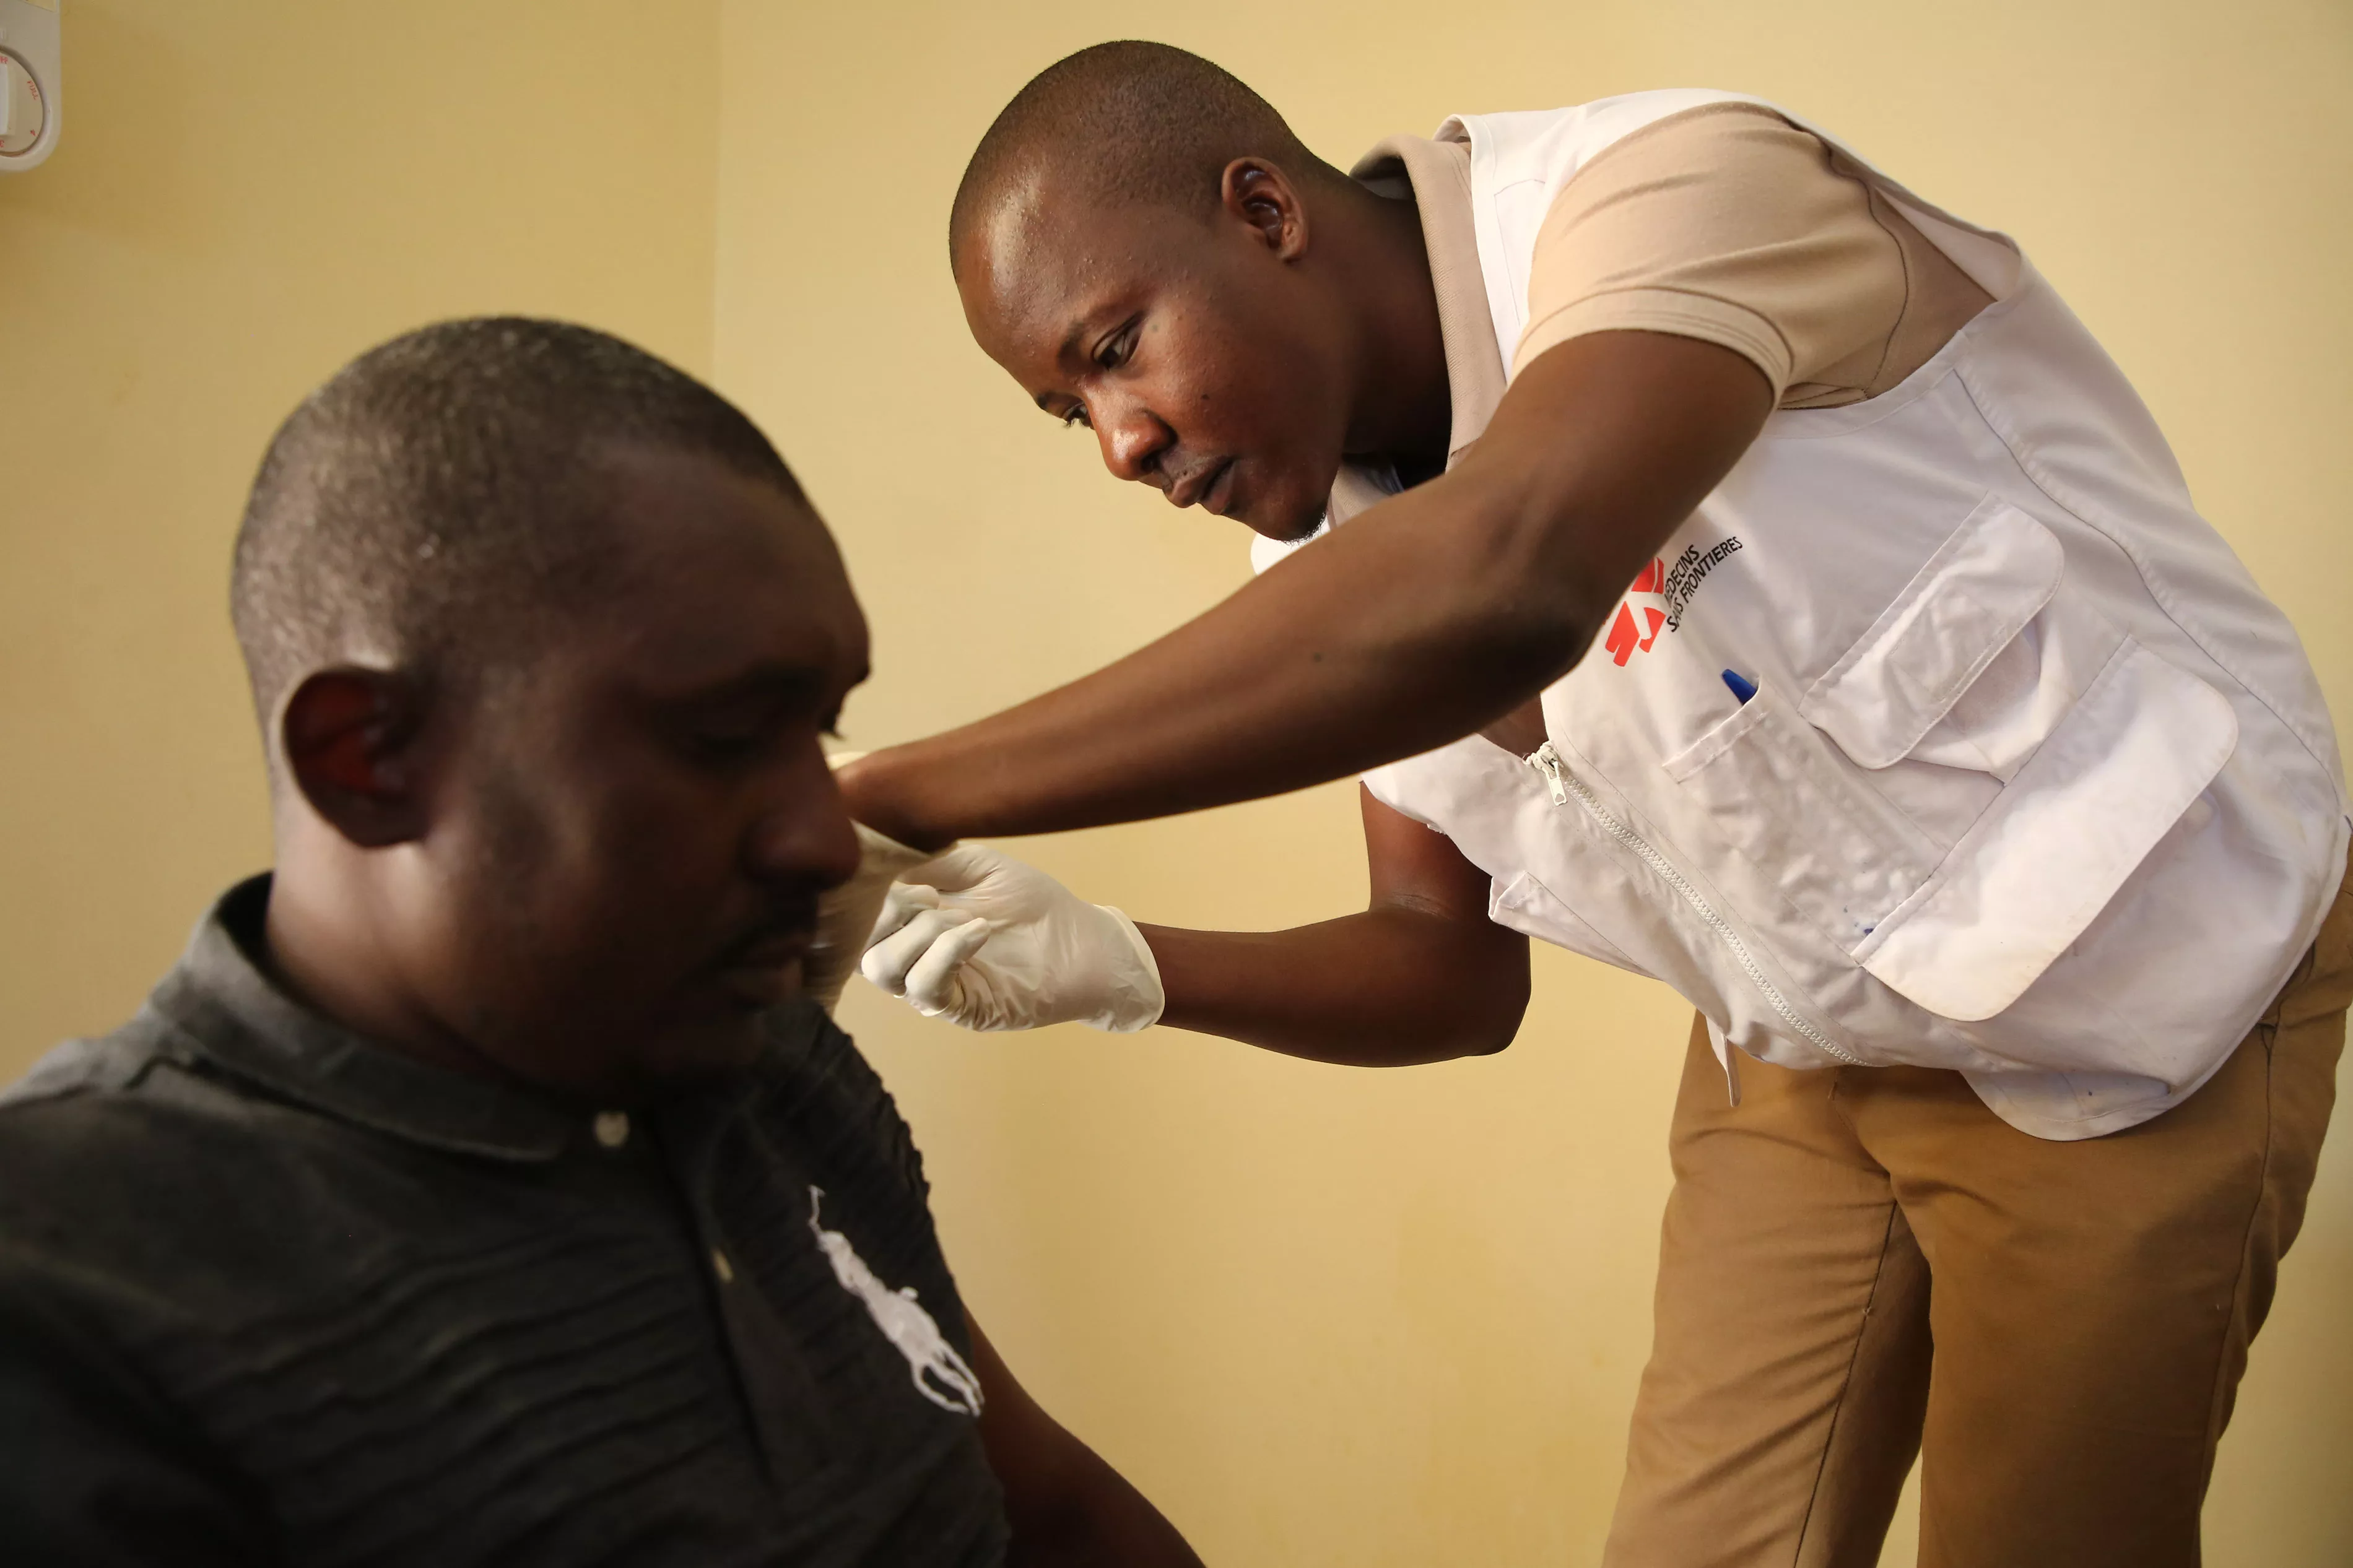 MSF staff giving vaccinations in Douentza, Mali. Photograph by Seydou Camara